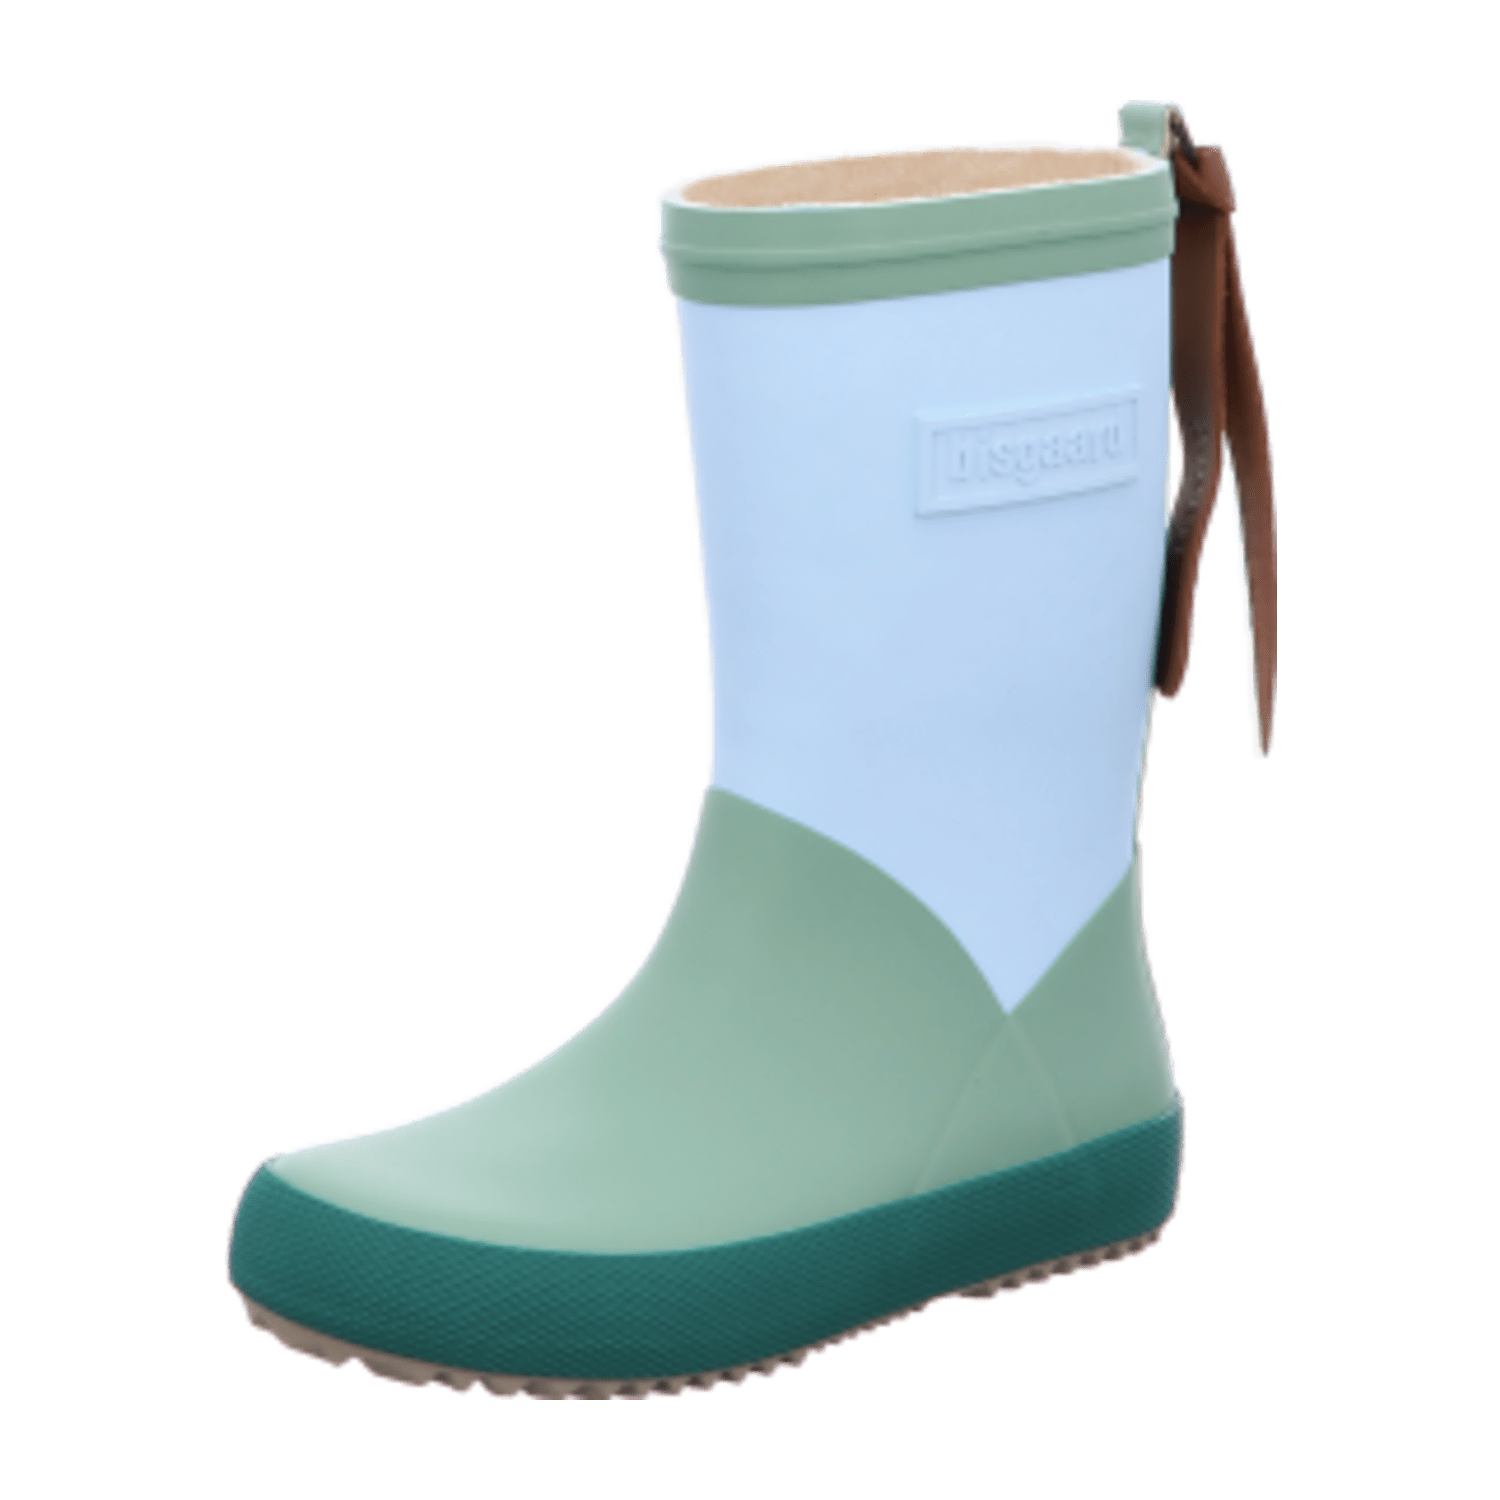 Bisgaard Rubber Boot fashion II